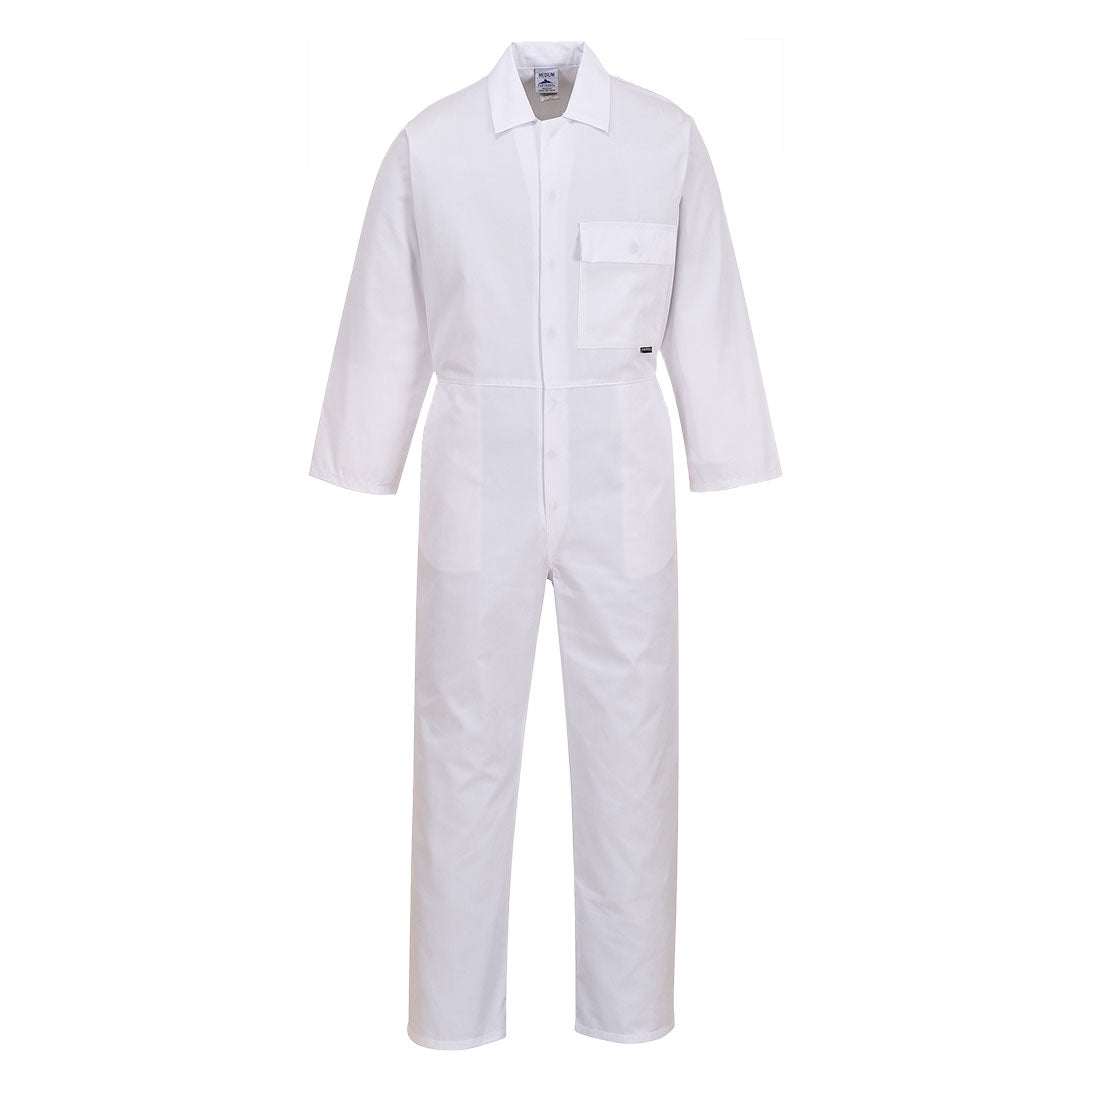 Portwest 2802 - White Standard Coverall boiler suit sz XL Regular